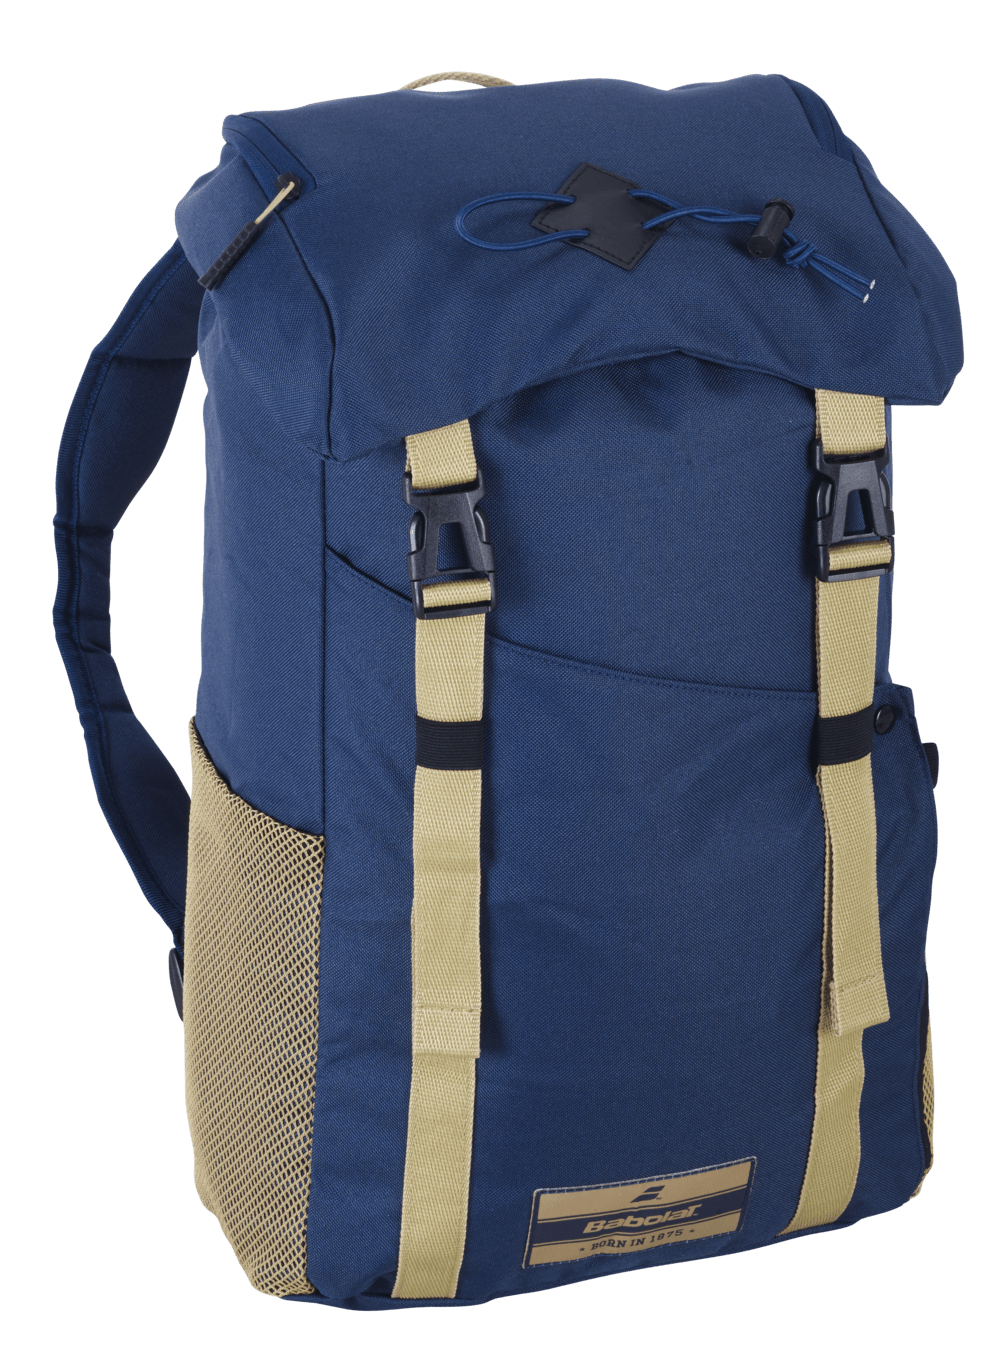 Babolat Classic Backpack